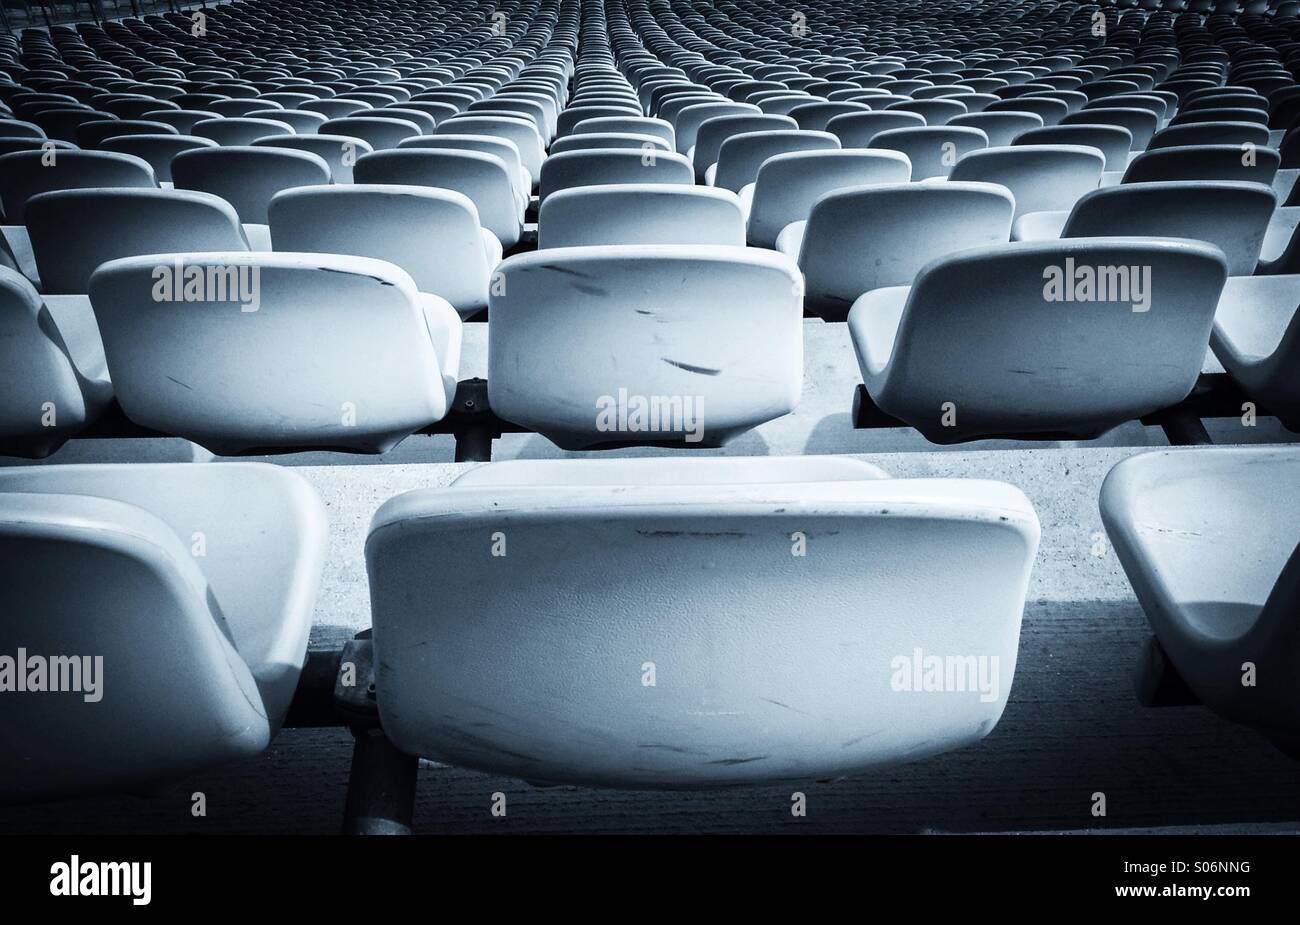 Row of empty blue seats at sport stadium Stock Photo